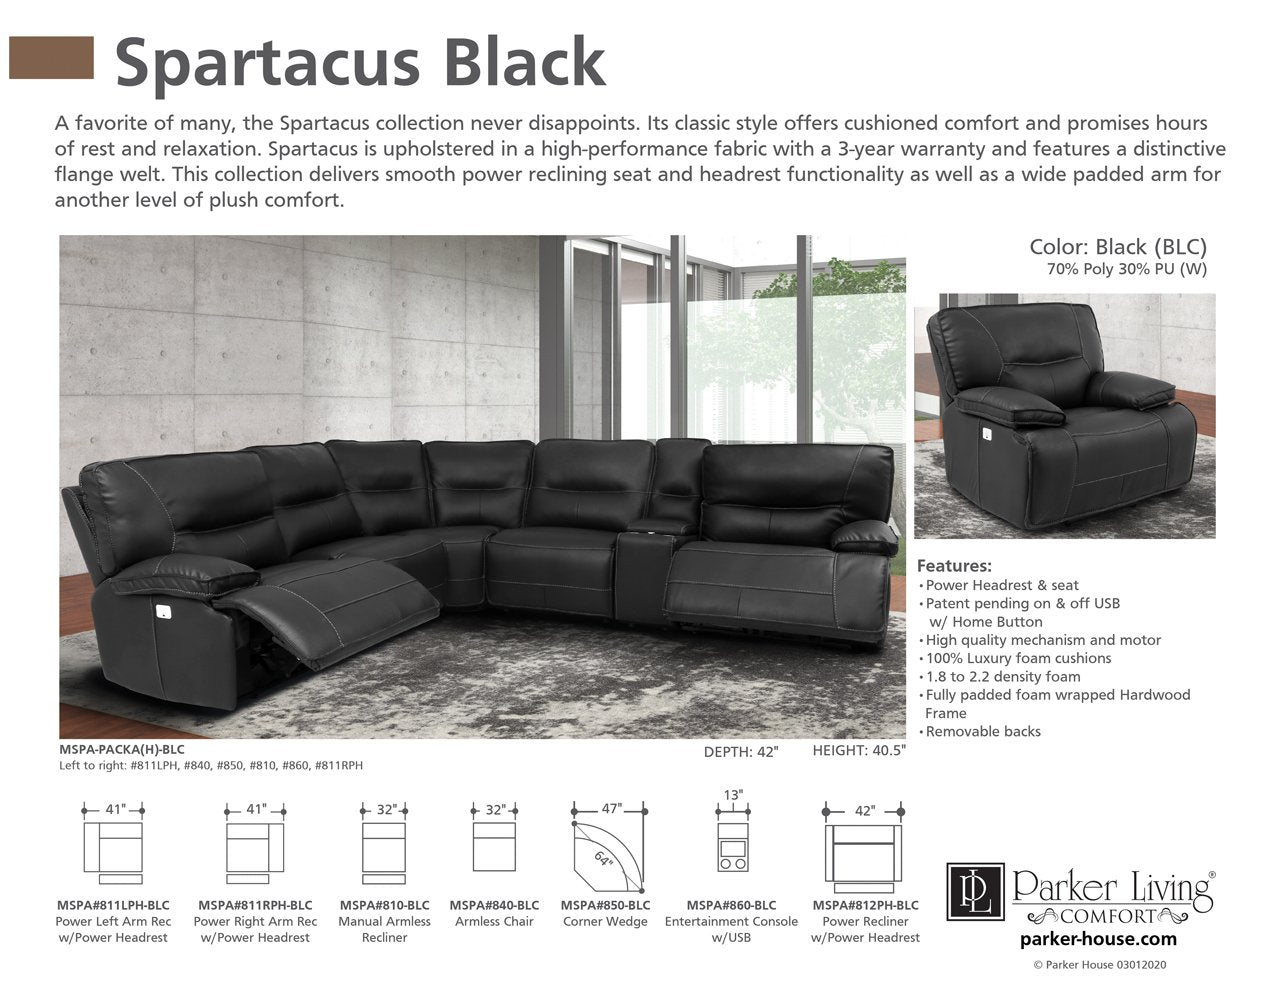 SPARTACUS - BLACK 6PC PACKAGE A (811LPH, 810, 850, 840, 860, 811RPH)